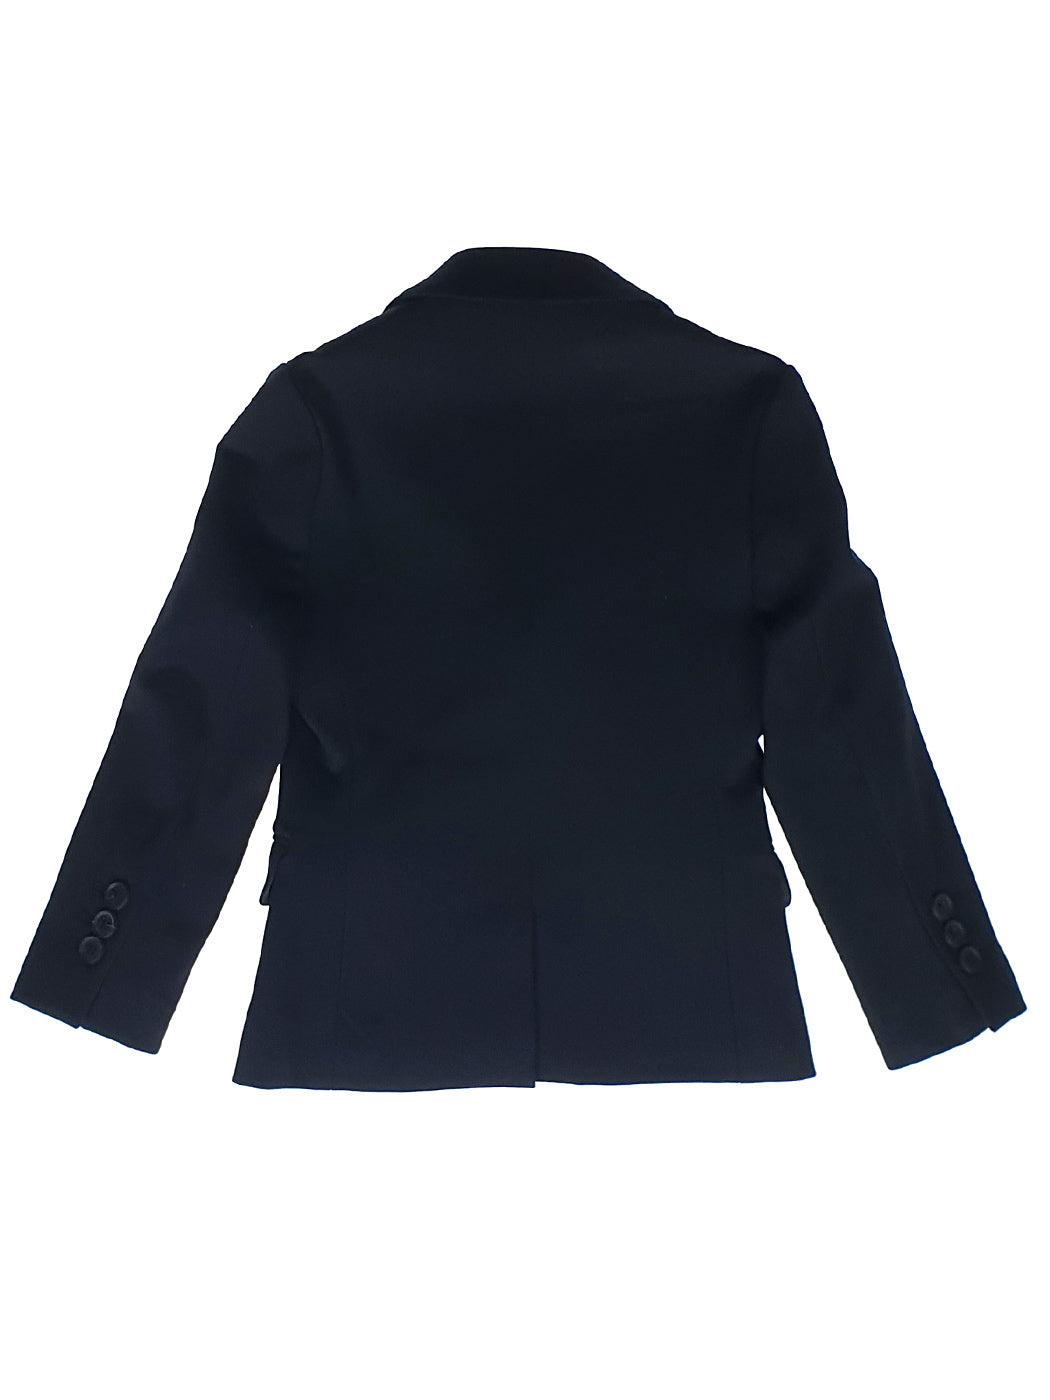 ANTONY MORATO Blue-Black jacket for boy - MKJS00014